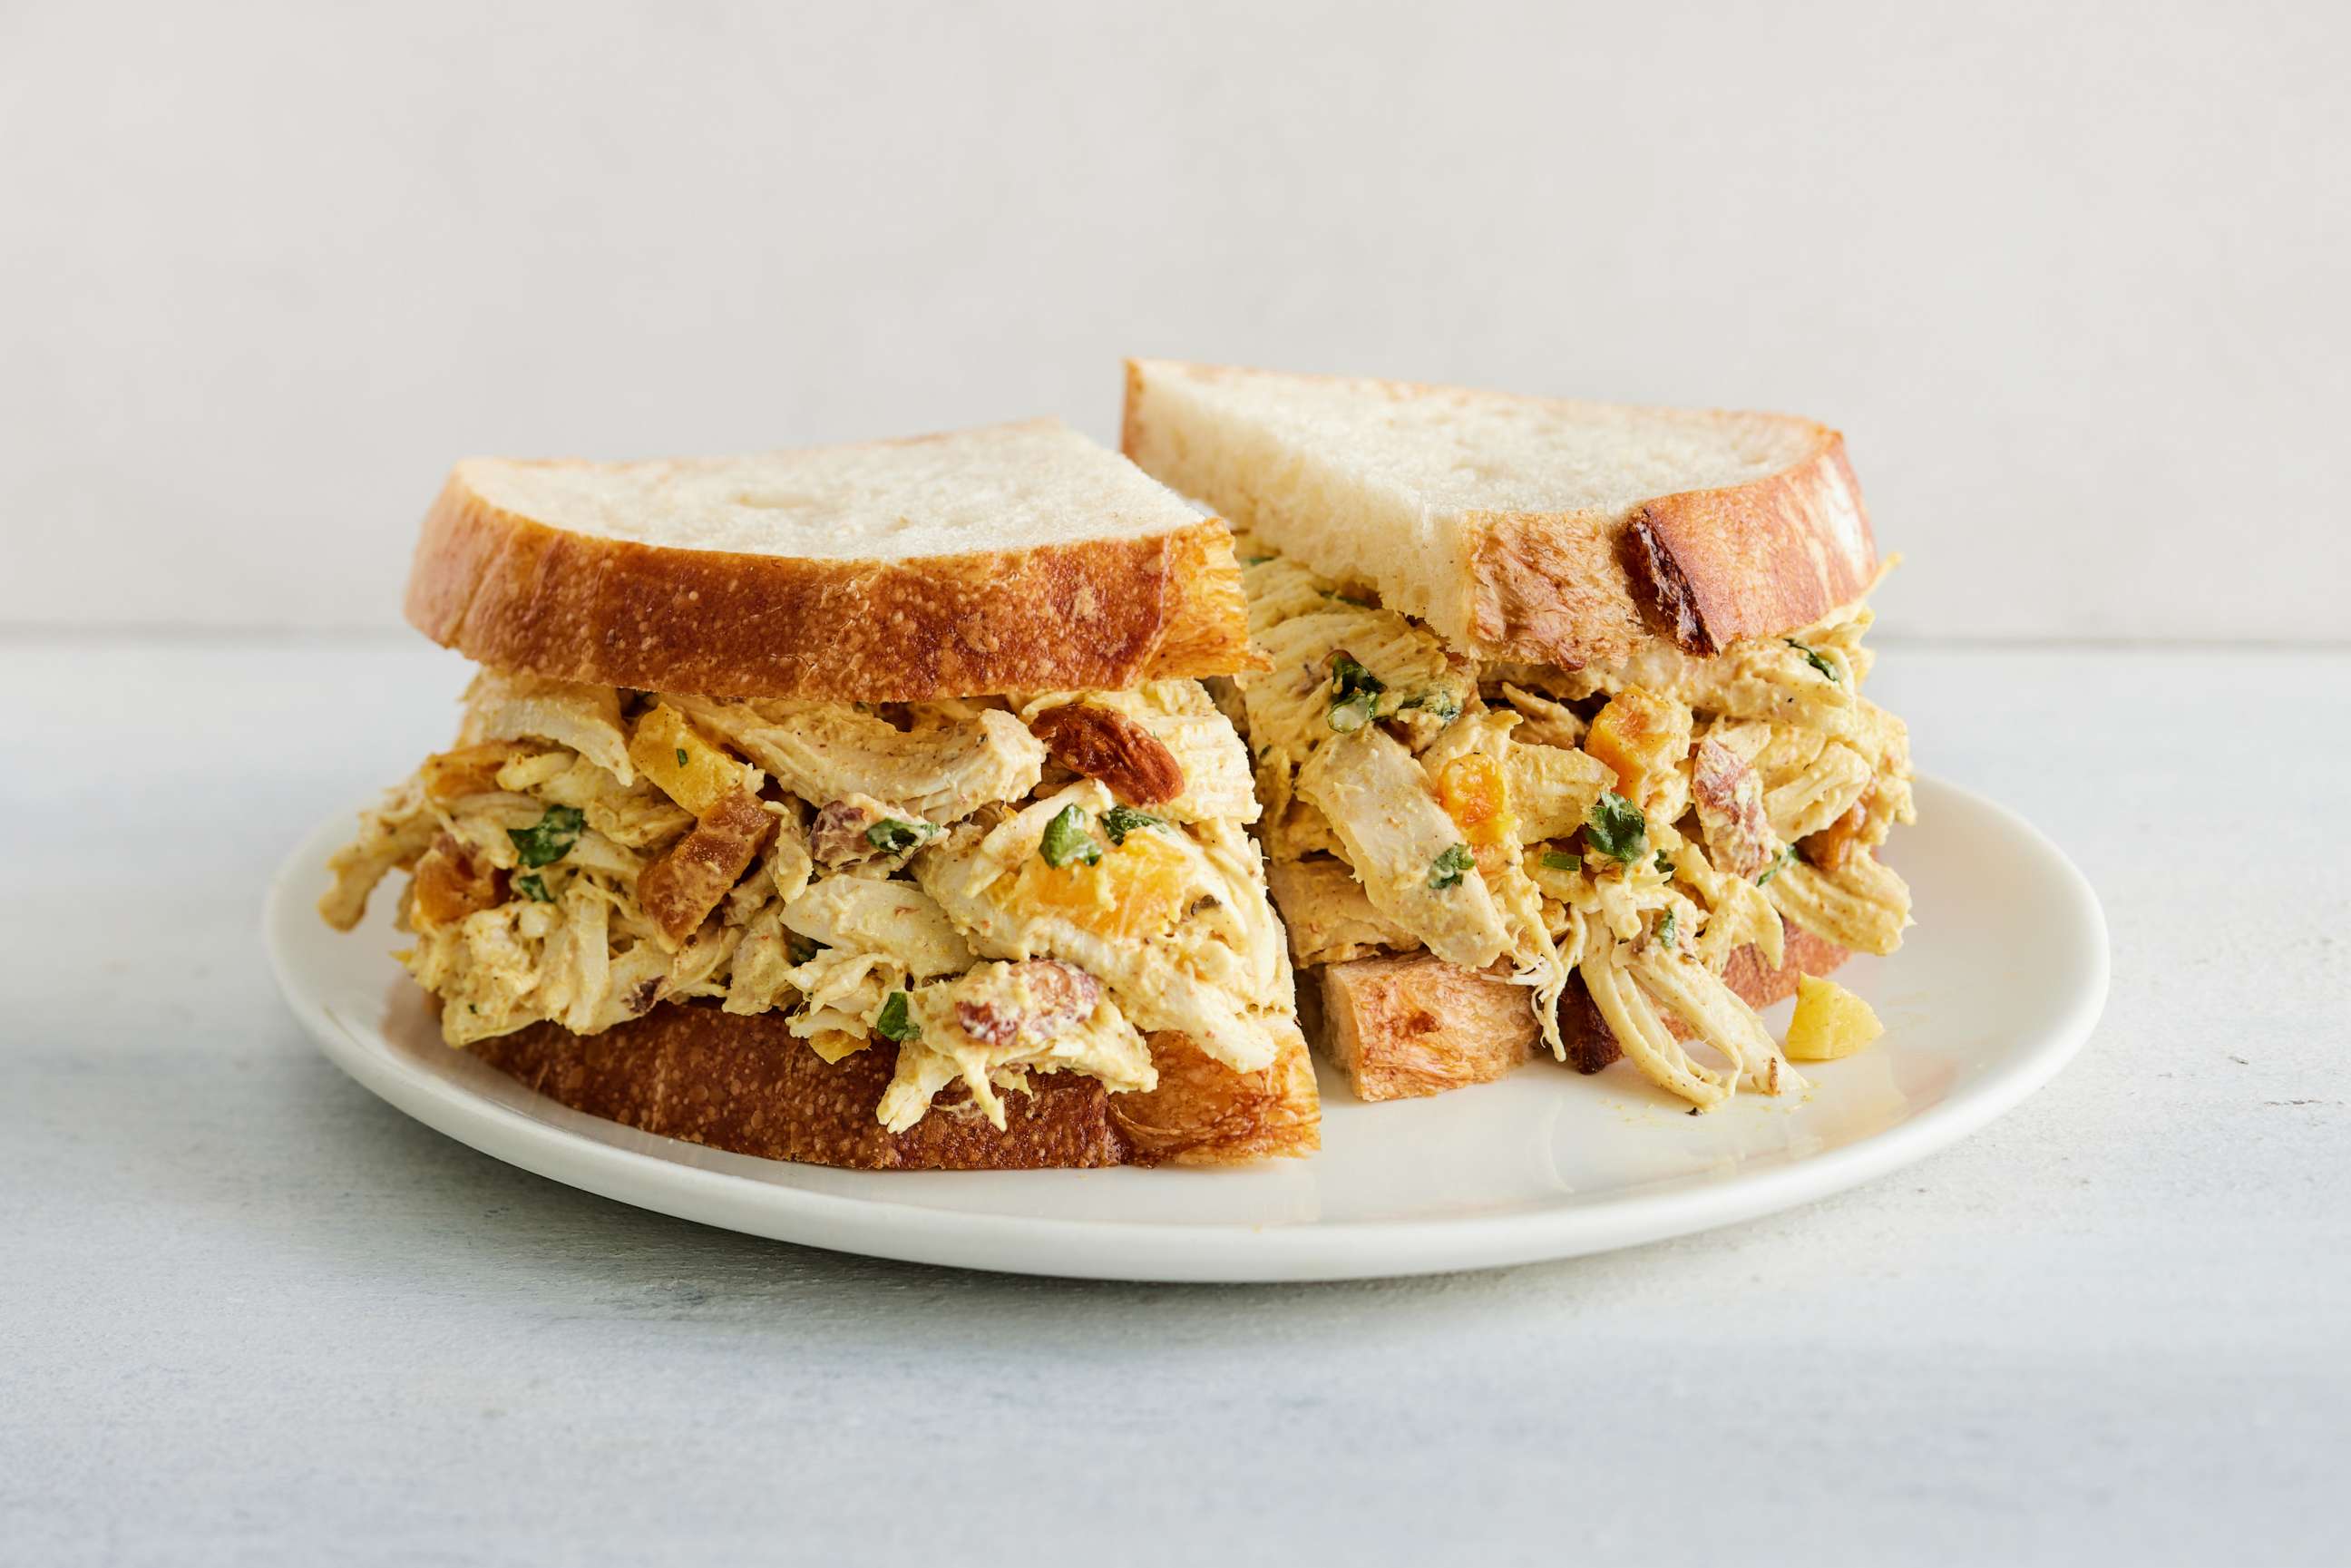 PHOTO: A coronation chicken salad sandwich.